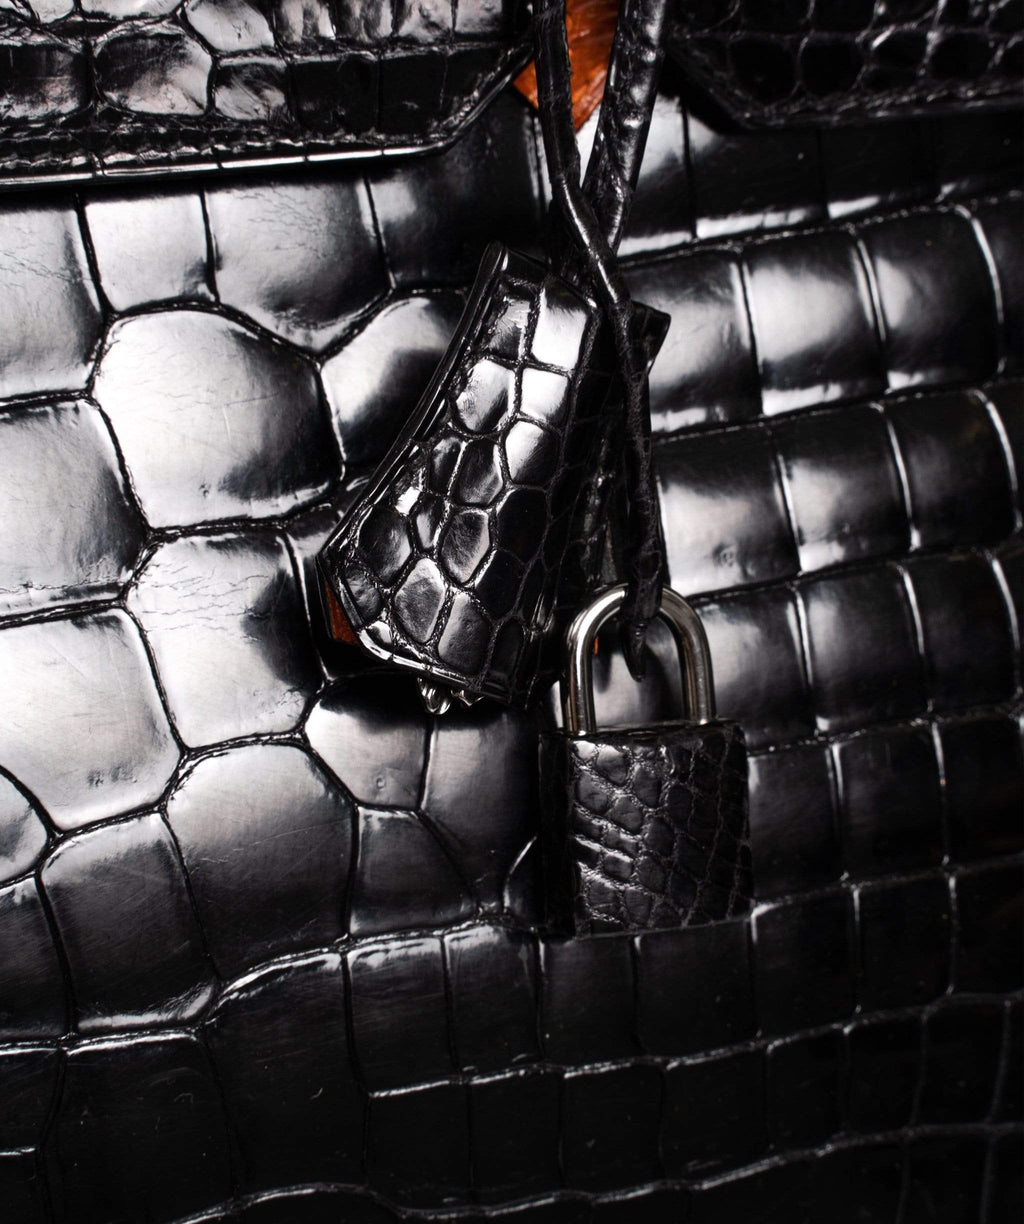 Hermès So Black Birkin 35 Alligator Purse is the perfect Valentine's gift  or a bag-o-holic - Luxurylaunches